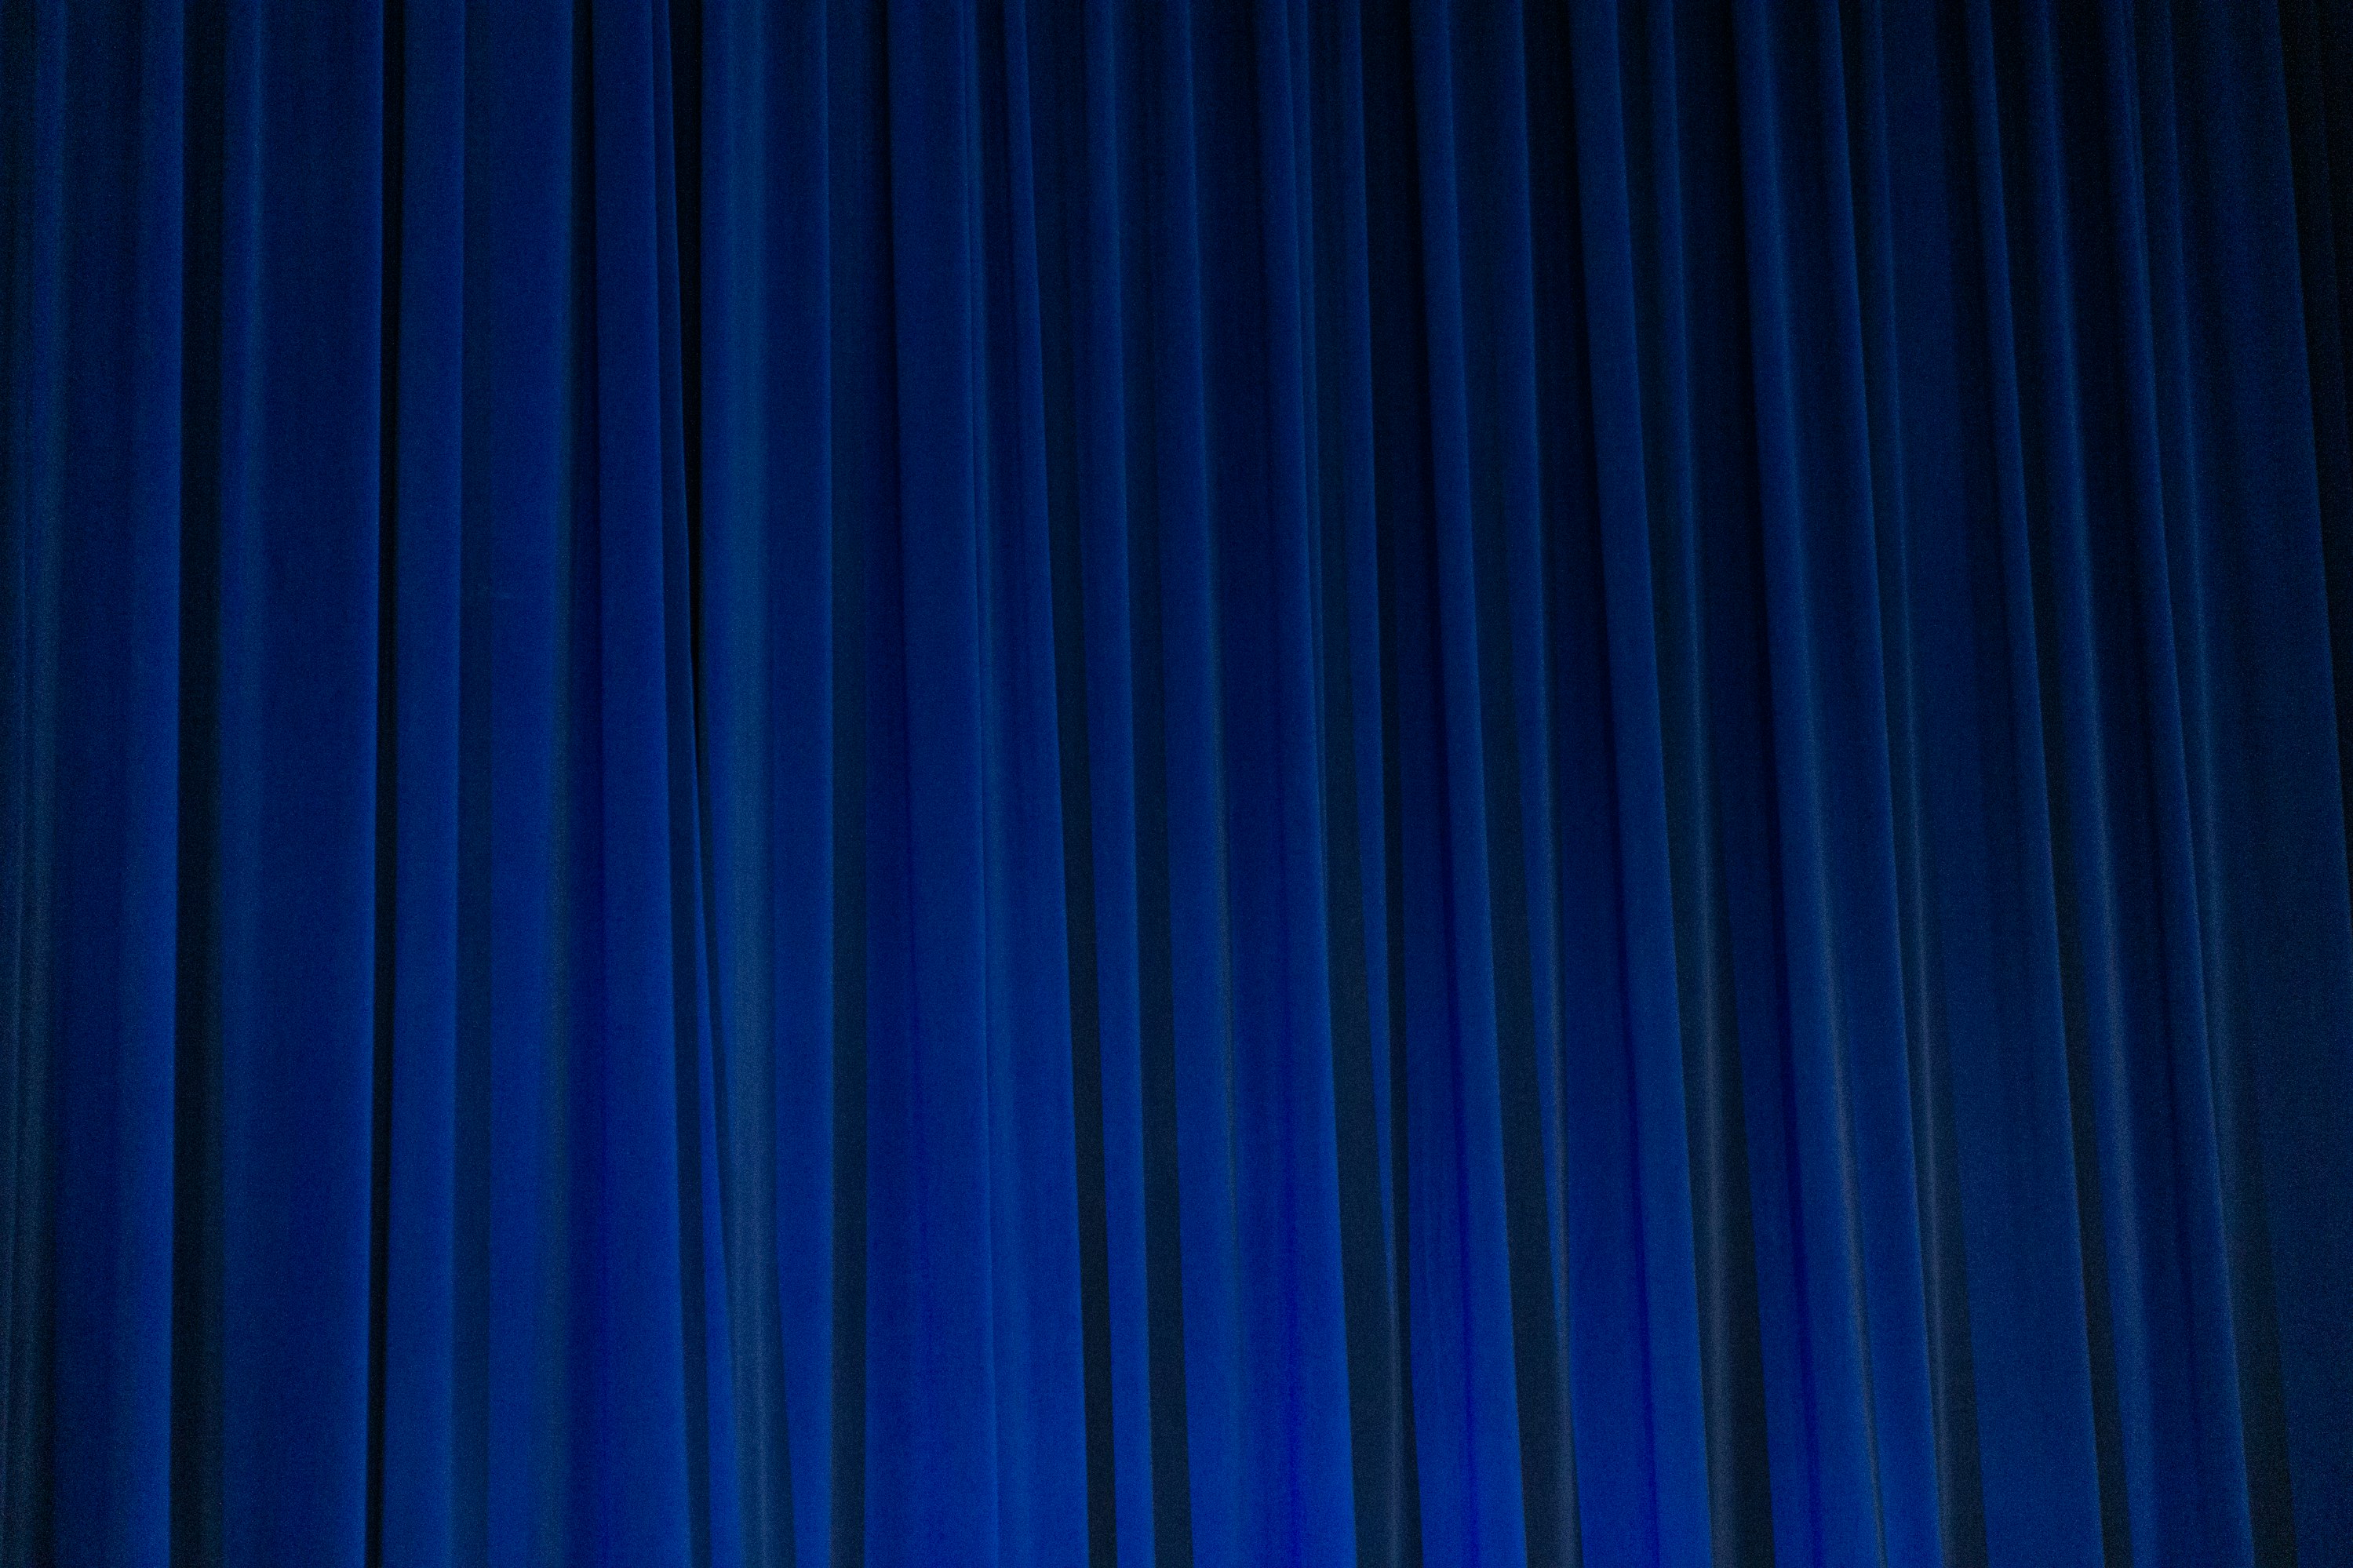 Blue theater (theatre) curtain at Disney World Florida. Shot at a wedding.